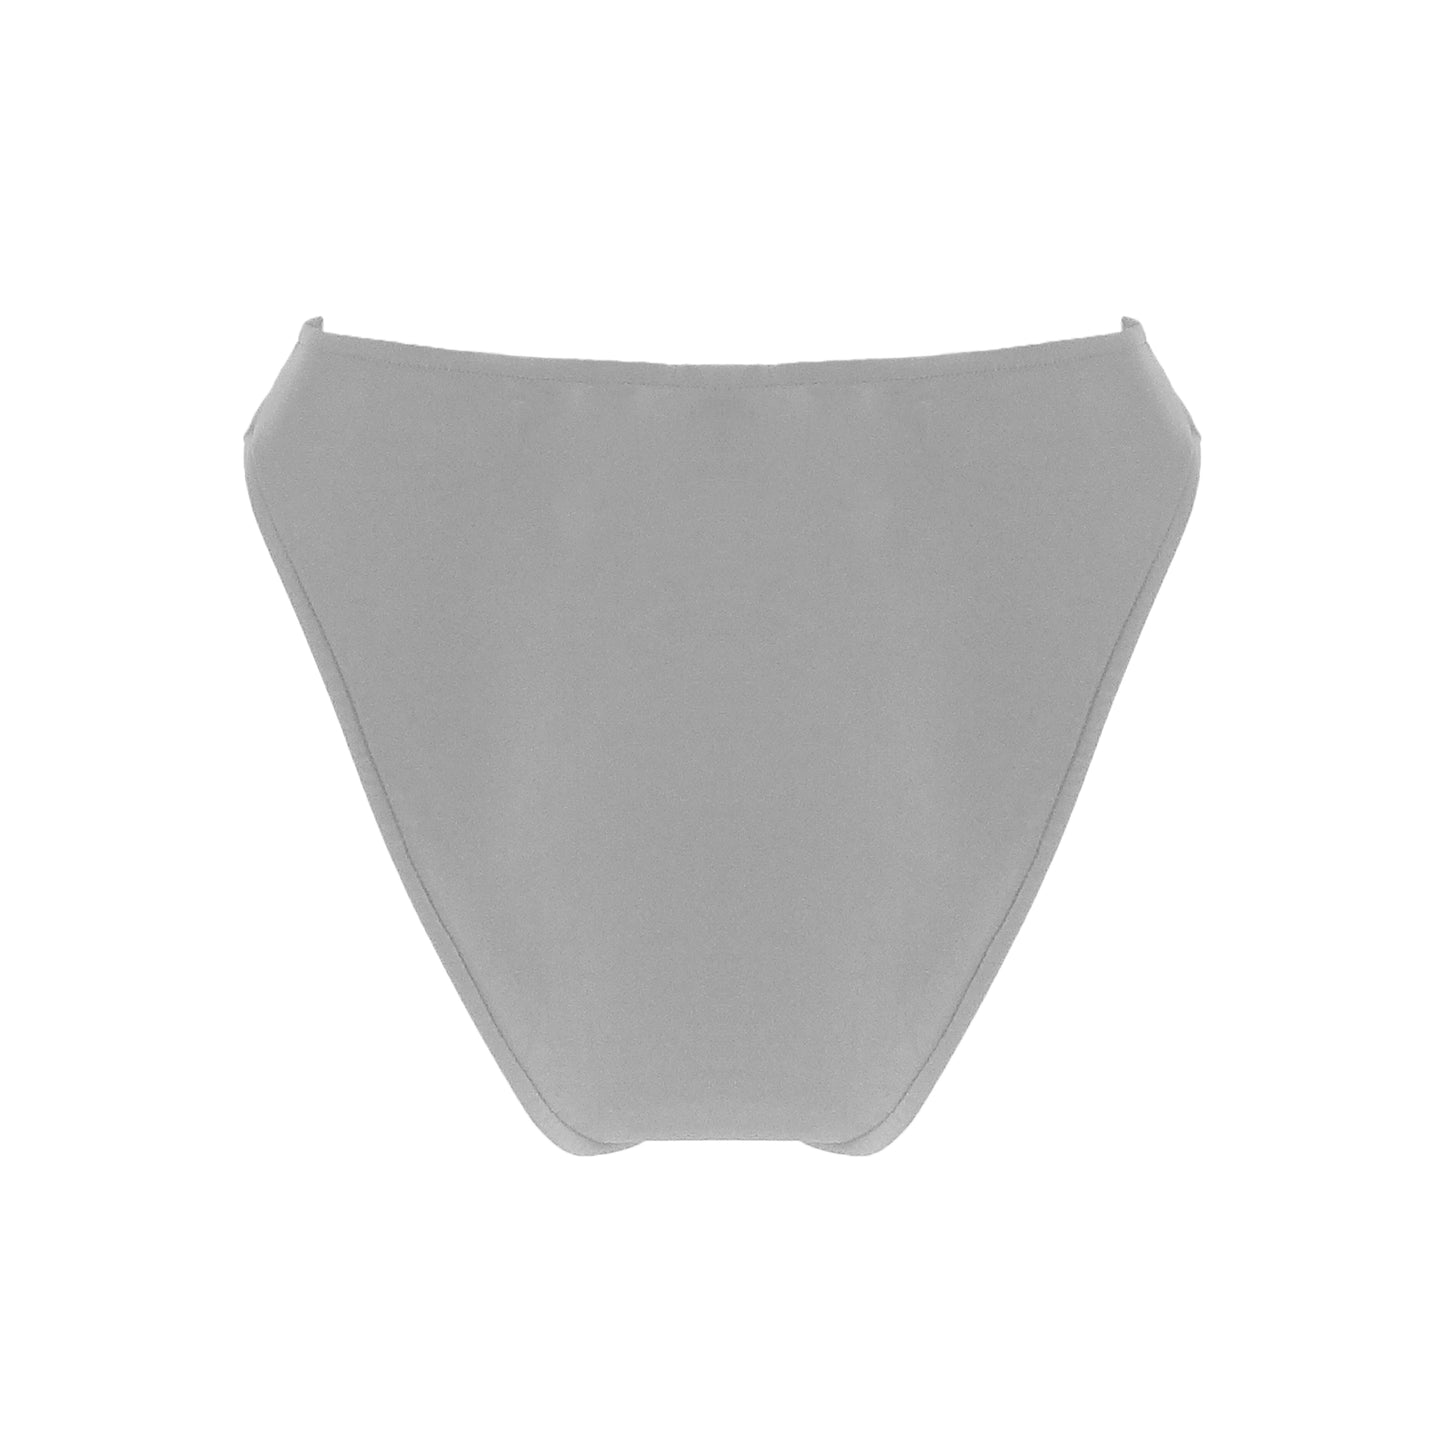 Back view of light grey High waist bikini bottom with high cut legs and cheeky bum coverage.